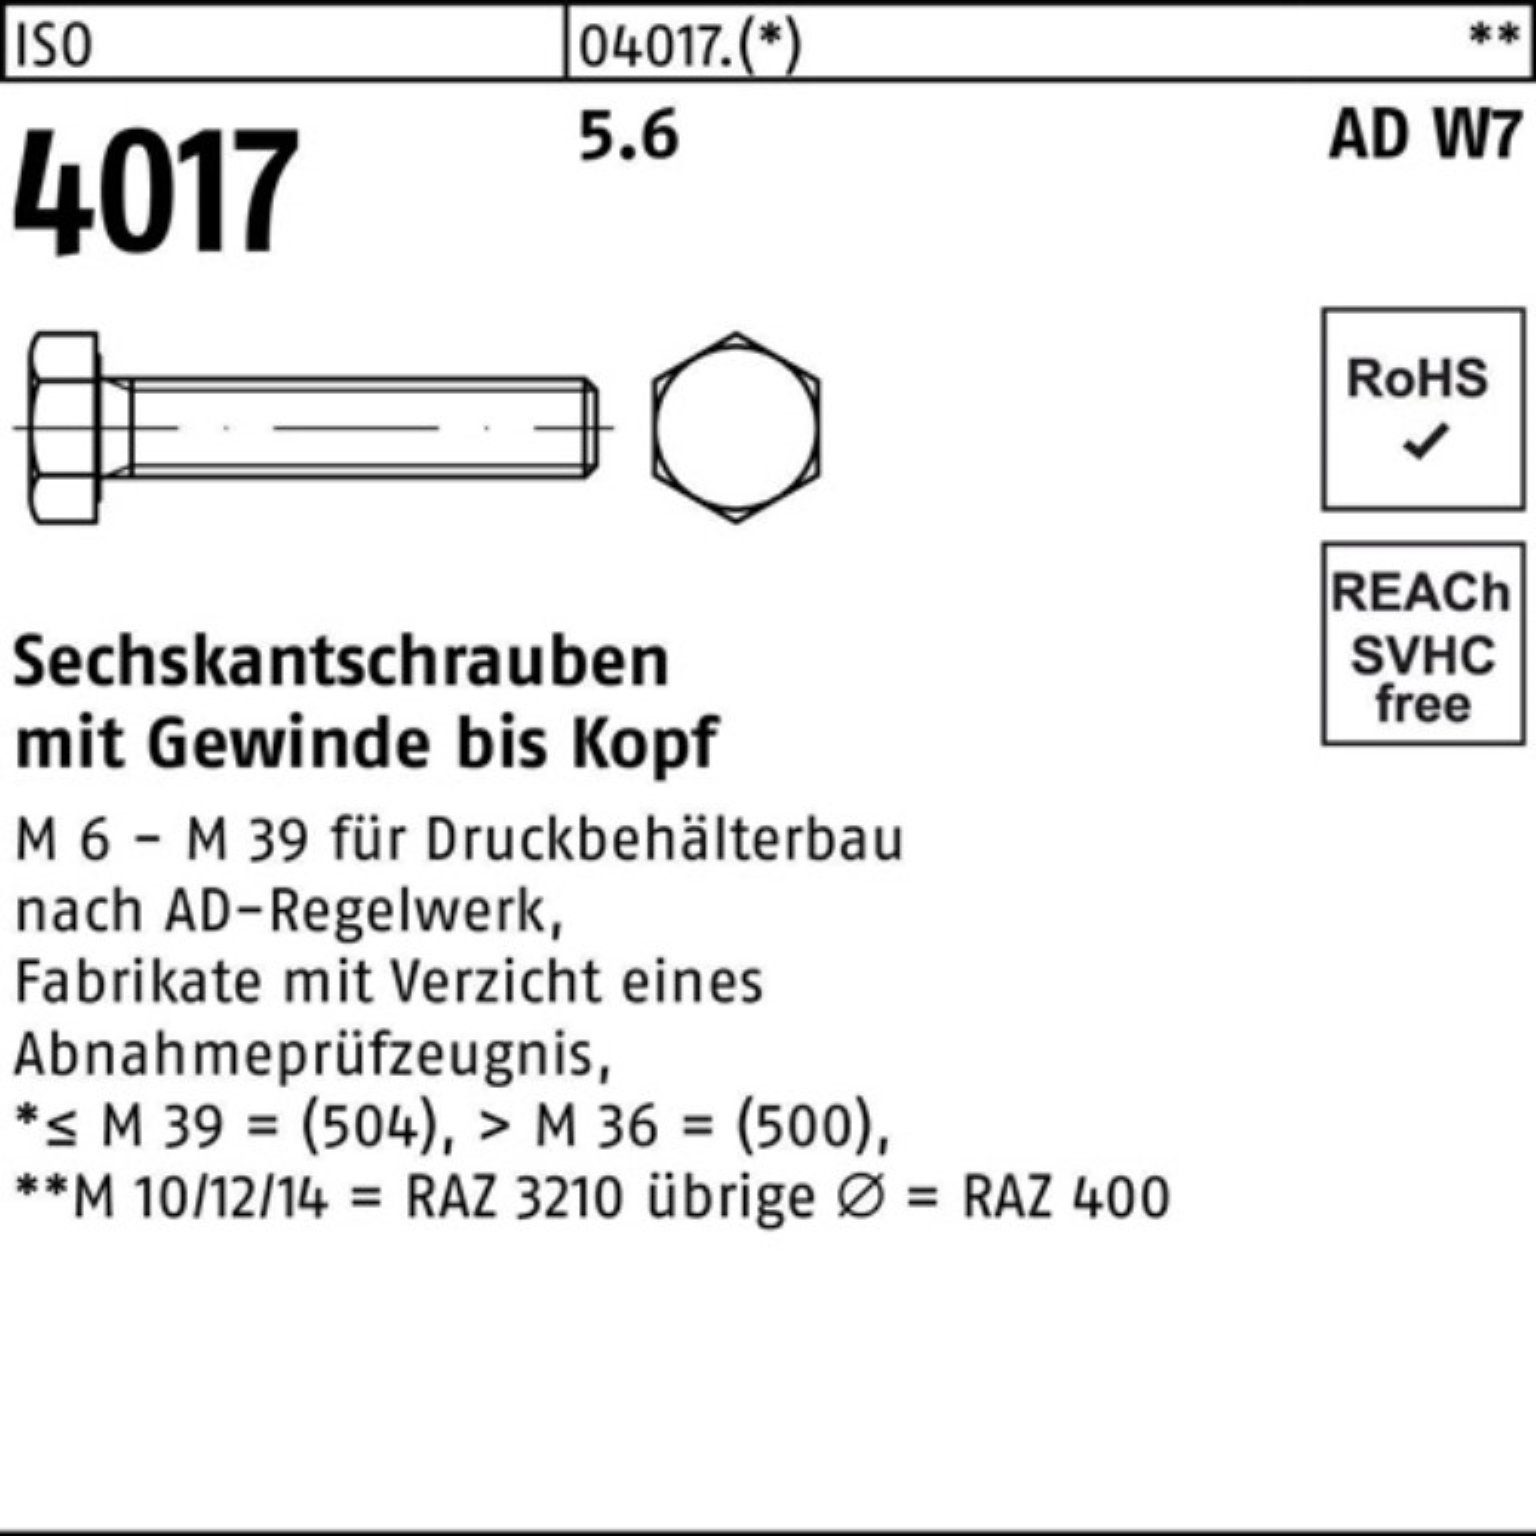 Bufab Sechskantschraube 100er Pack Sechskantschraube ISO 4017 VG M20x 140 5.6 AD W7 25 Stück